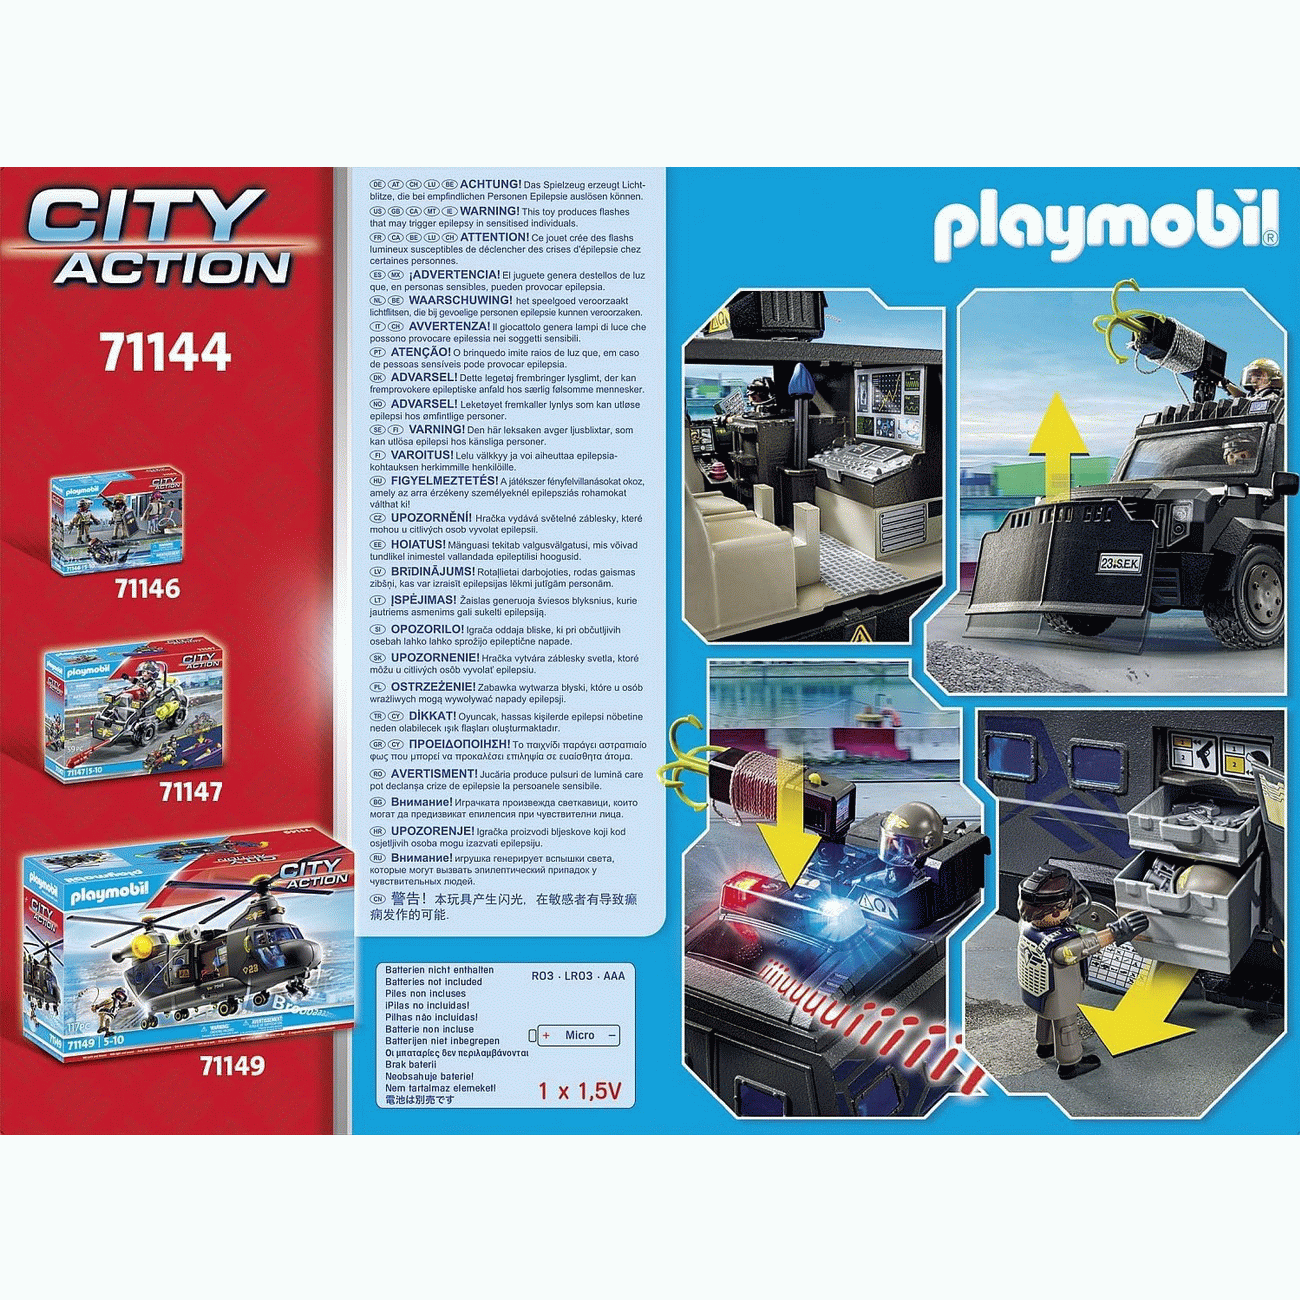 Playmobil 71144 - SWAT Geländefahrzeug (City Action)